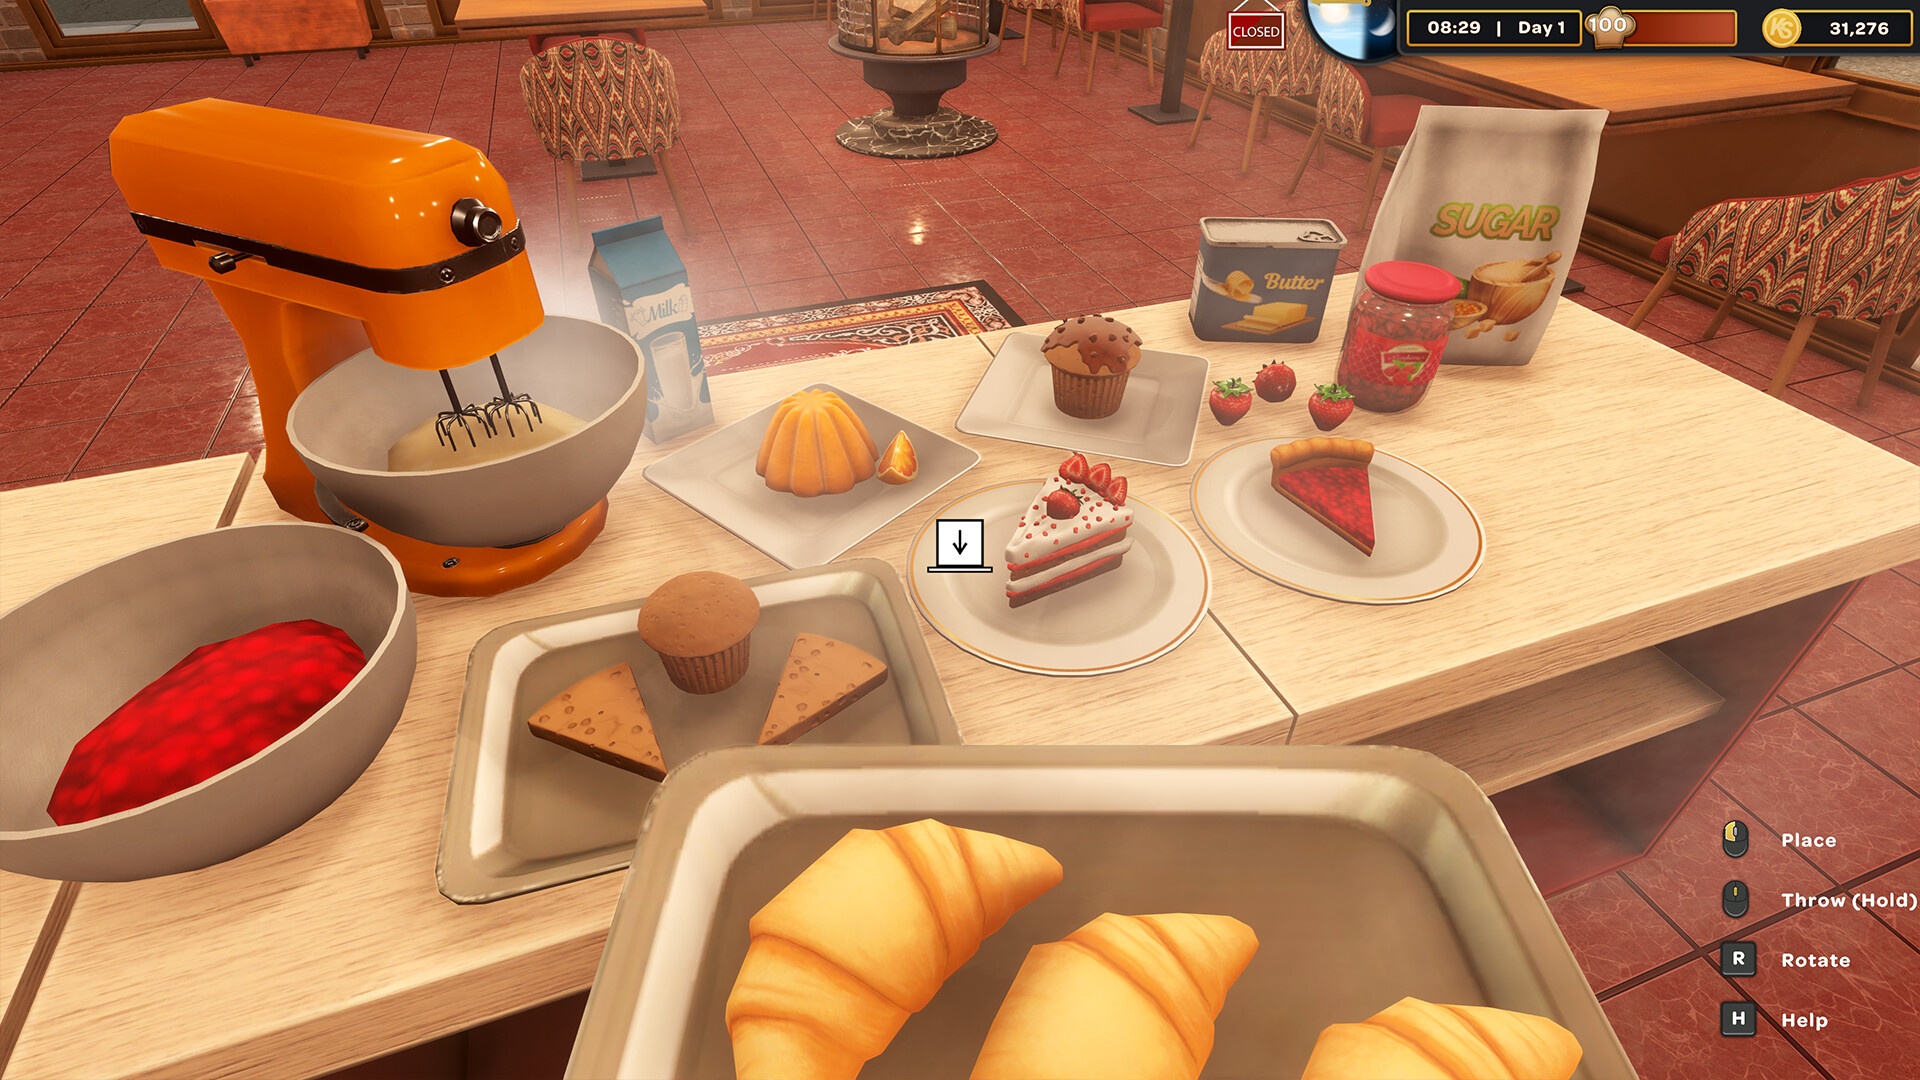 Kebab Chefs! - Restaurant Simulator Steam Account